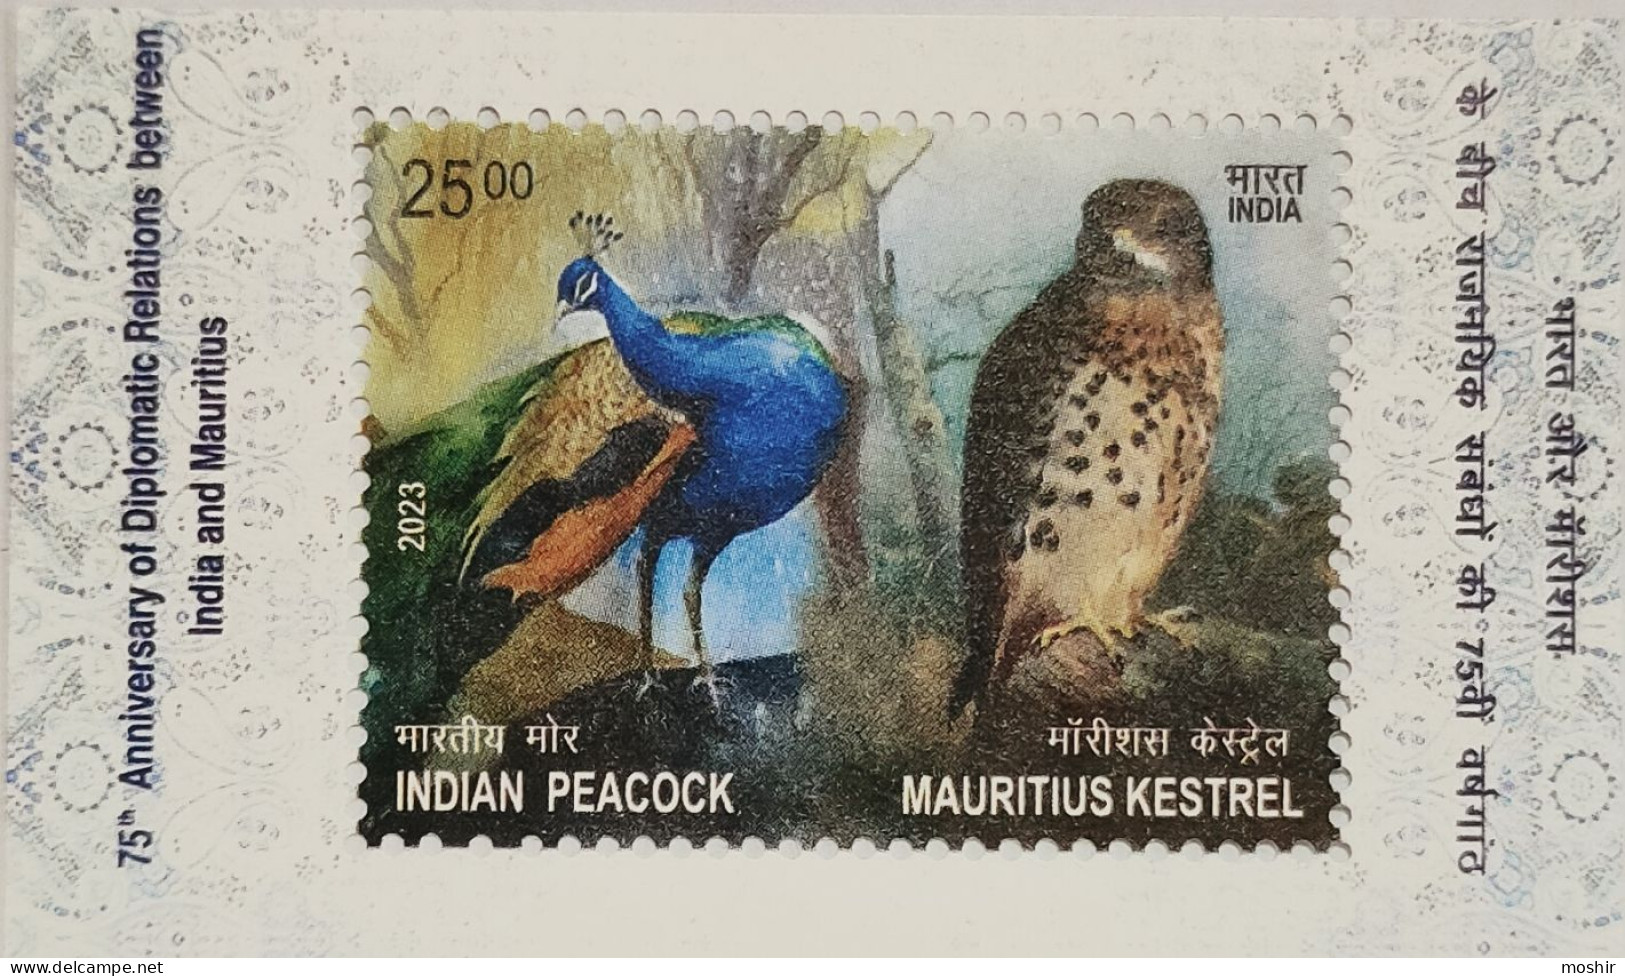 PEACOCK - KESTREL - INDIA-MAURITIUS JOINT ISSUE - Peacocks